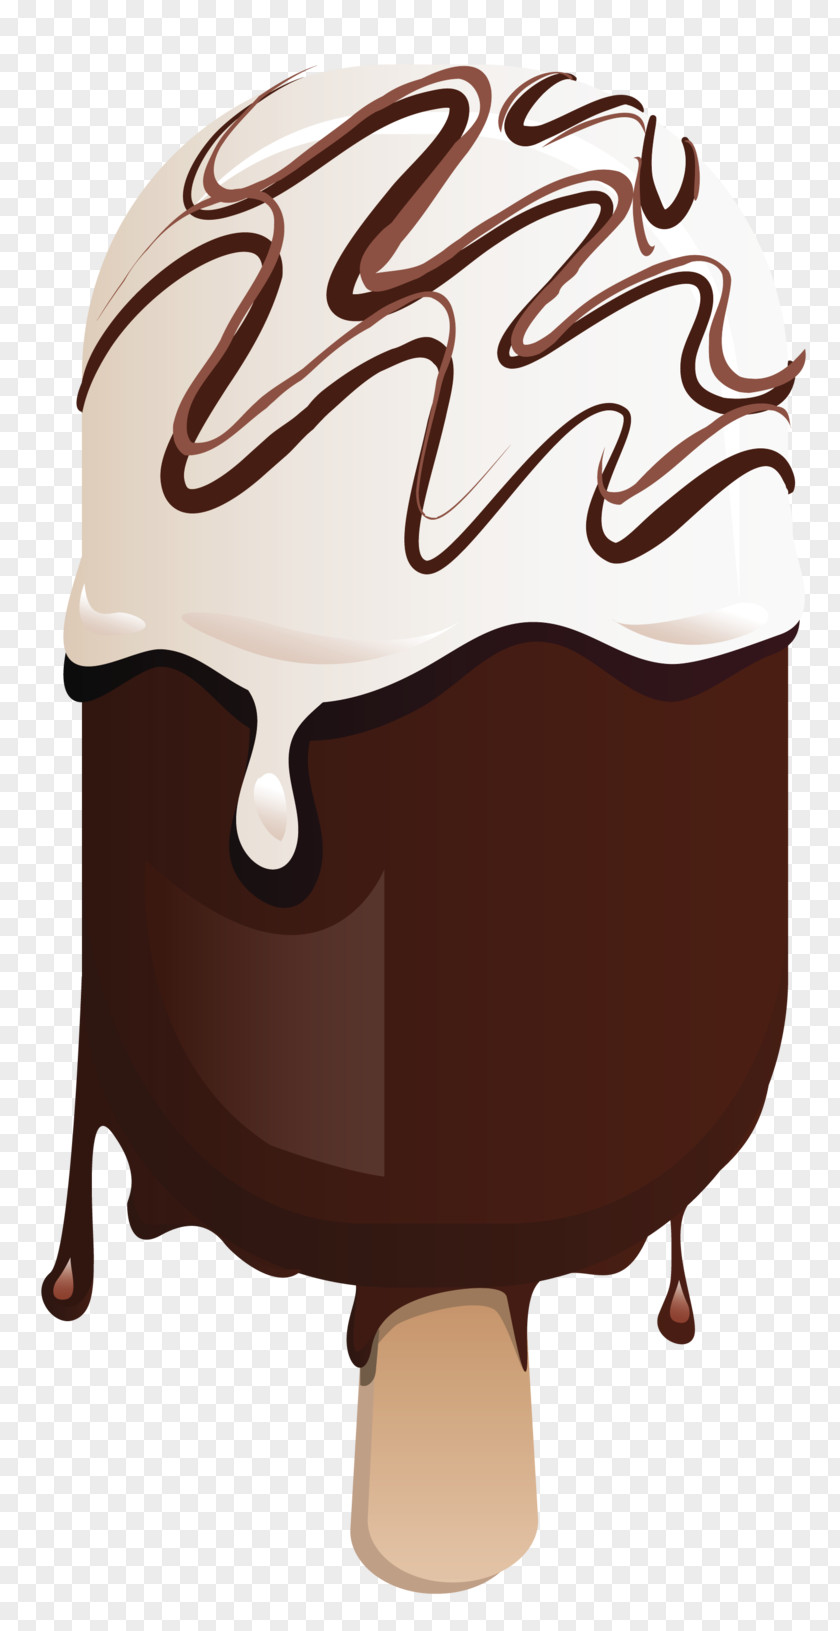 Ice Cream Pop Chocolate Bar Clip Art PNG